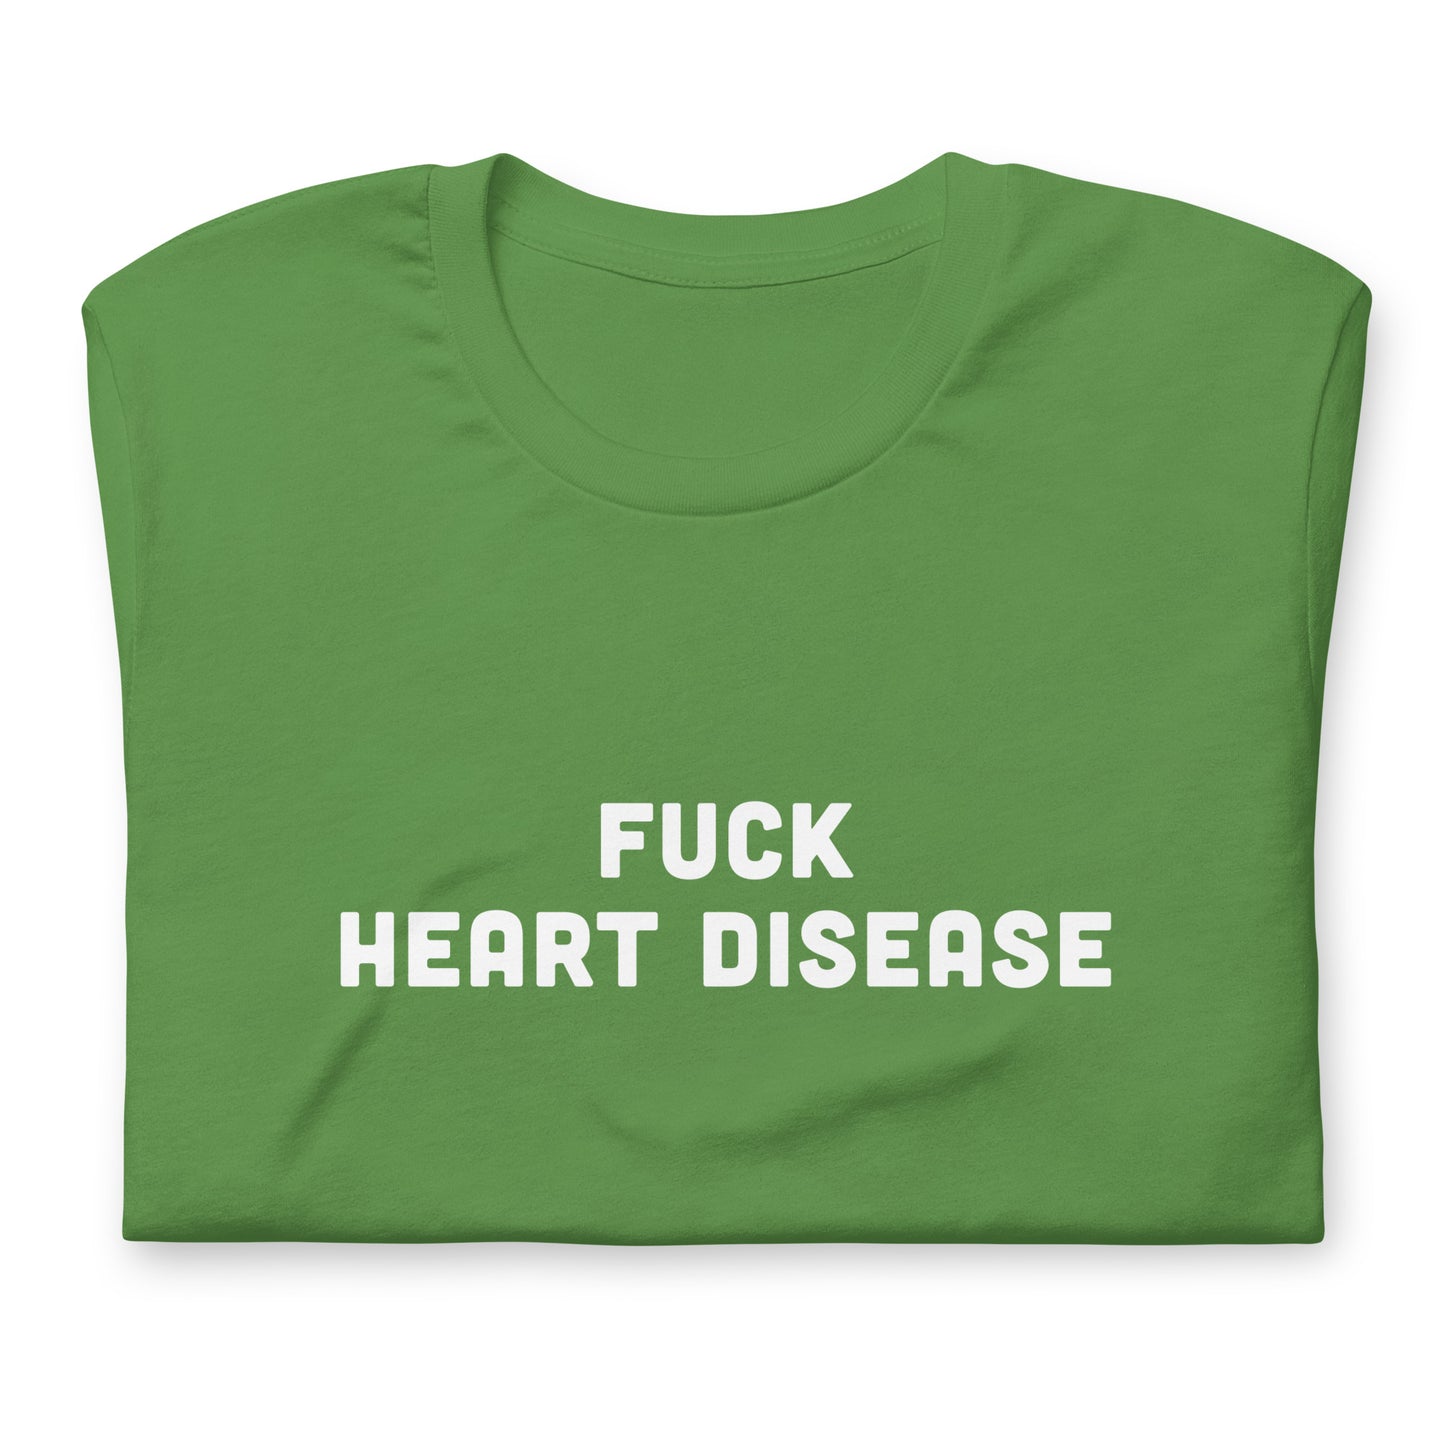 Fuck Heart Disease T-Shirt Size 2XL Color Navy